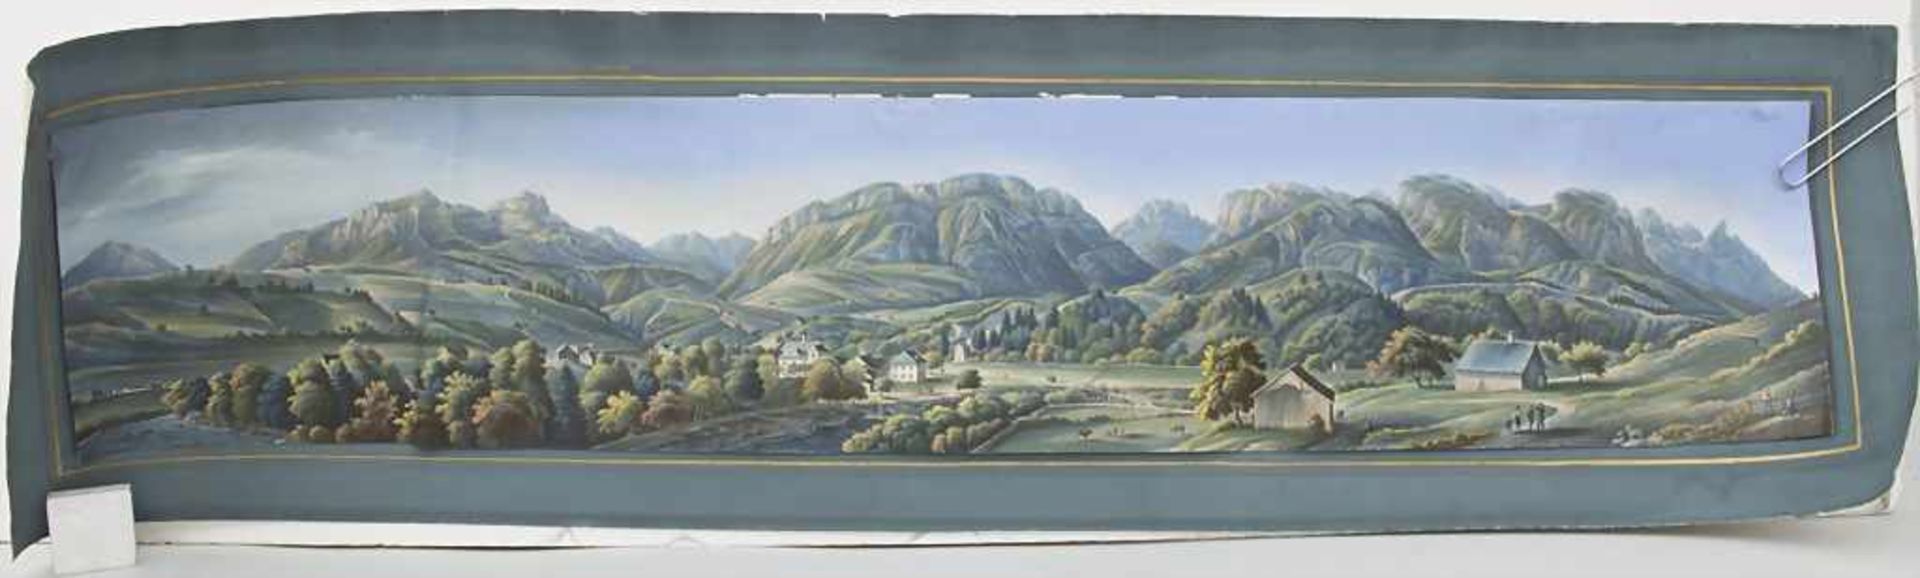 Panoramaansicht 'Appenzeller Berge' / A panoramic view 'Apenzell mountains' - Bild 4 aus 5